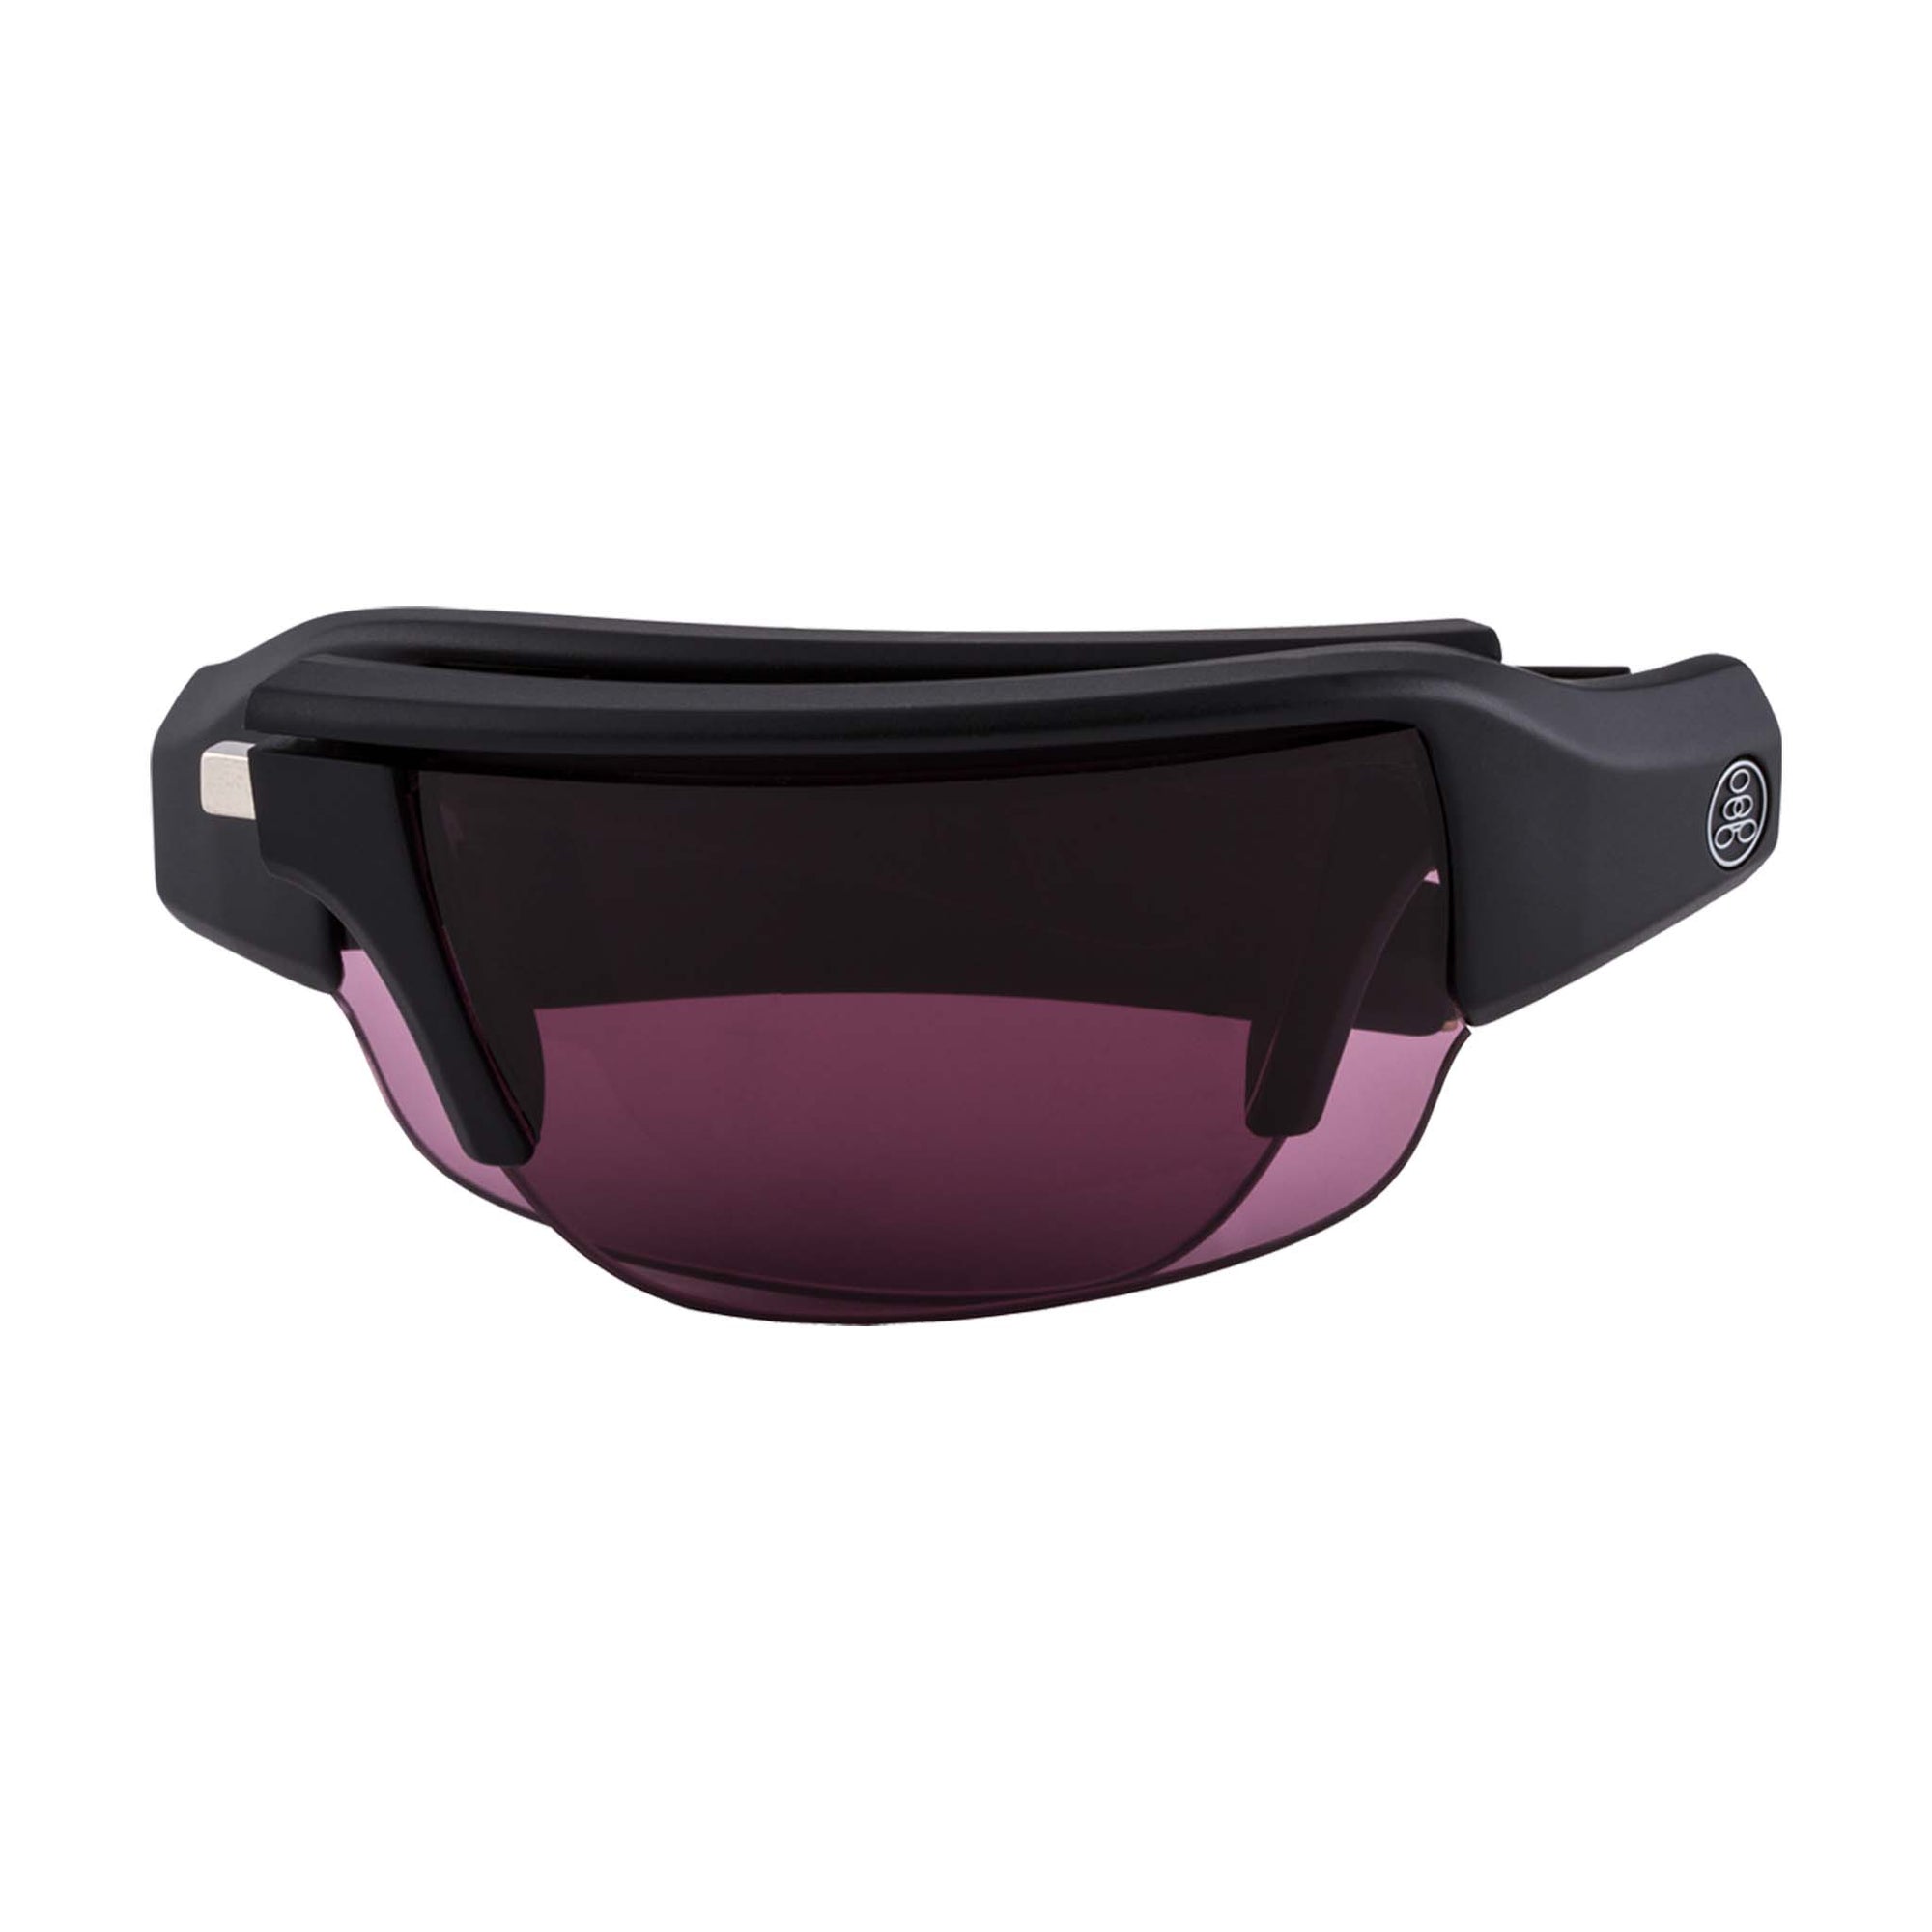 Popticals, Premium Compact Sunglasses, PopGun, 200010-BMVS, Standard Golf Sunglasses, Matte Black Frame, Violet Golf Lenses, Compact View